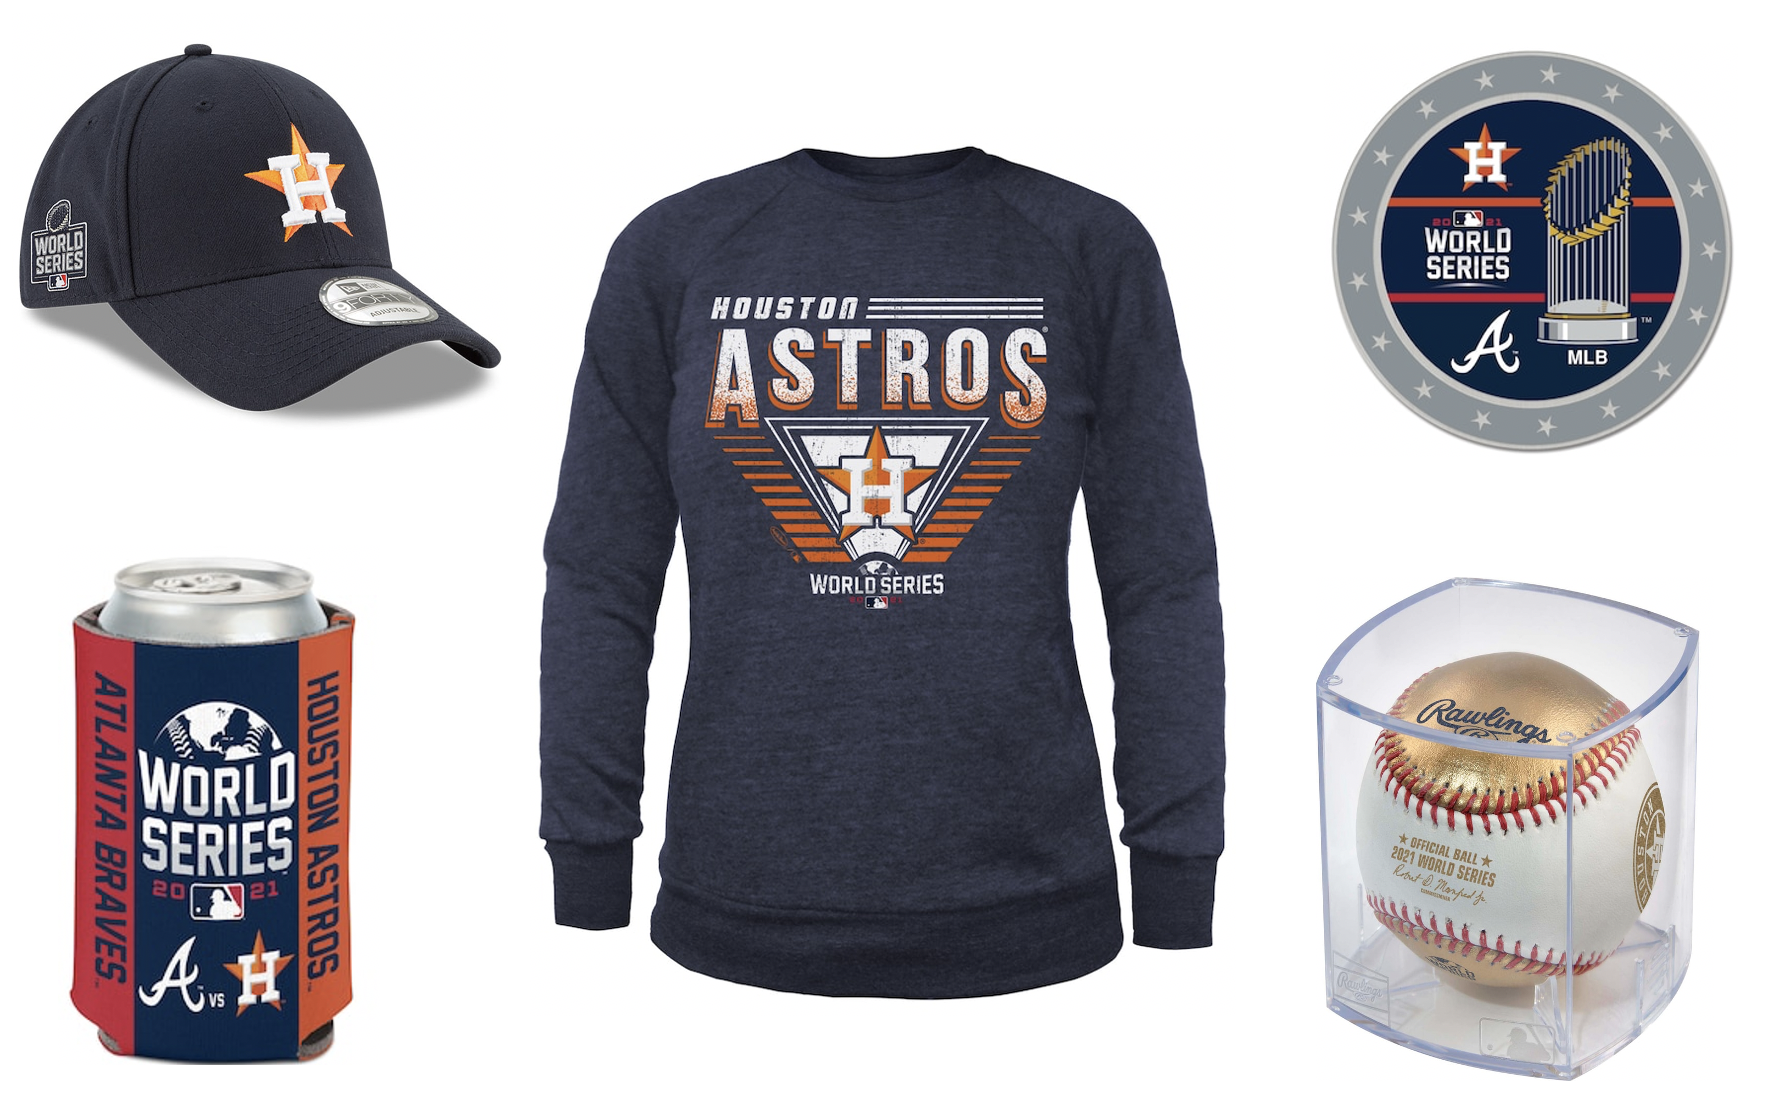 Astros merchandise